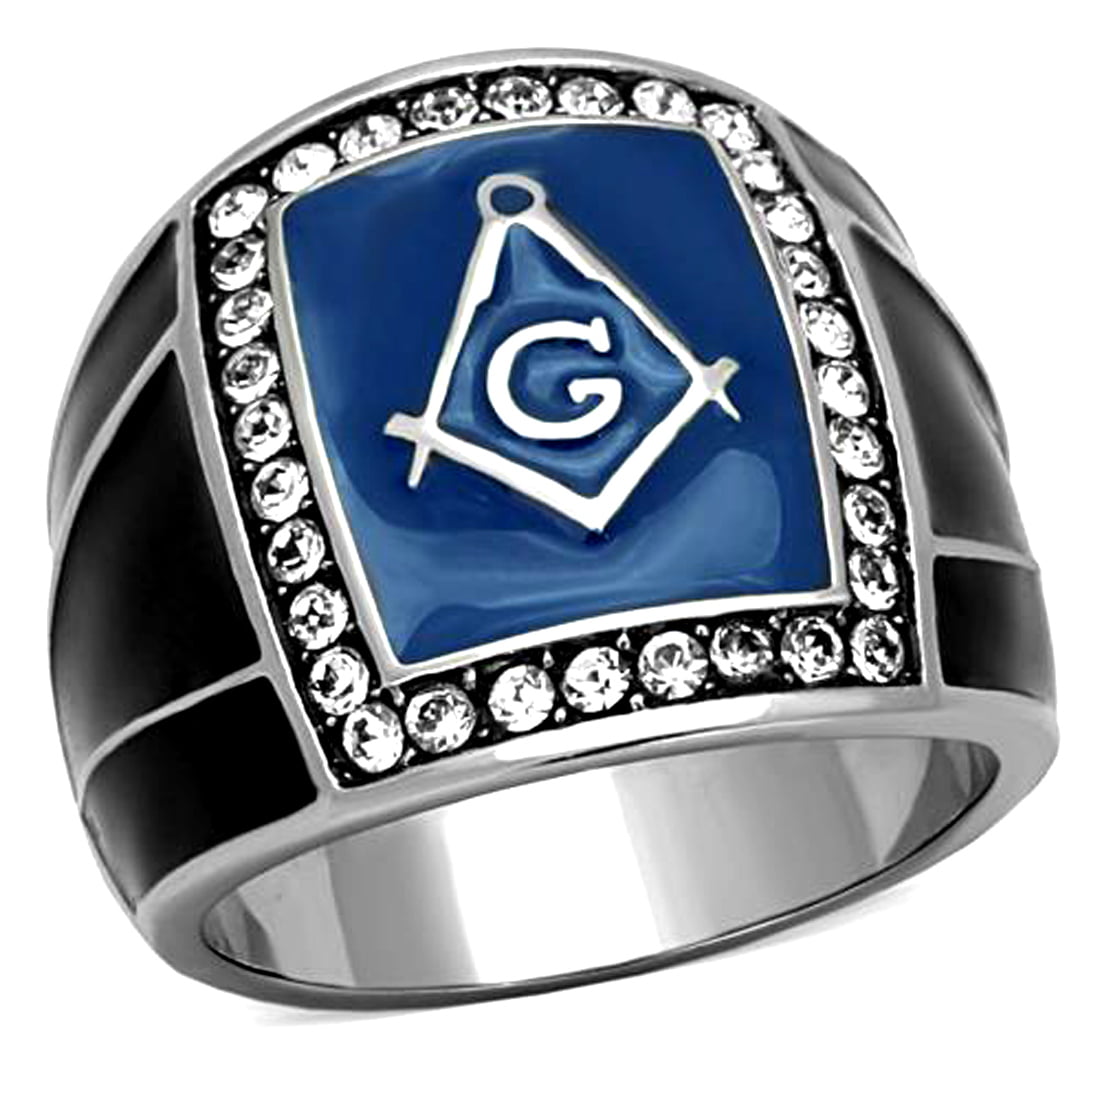 Details about   Masonic Mason Black IP Finish Stainless Blue Lodge CZ Mens Ring Size 12 T30 